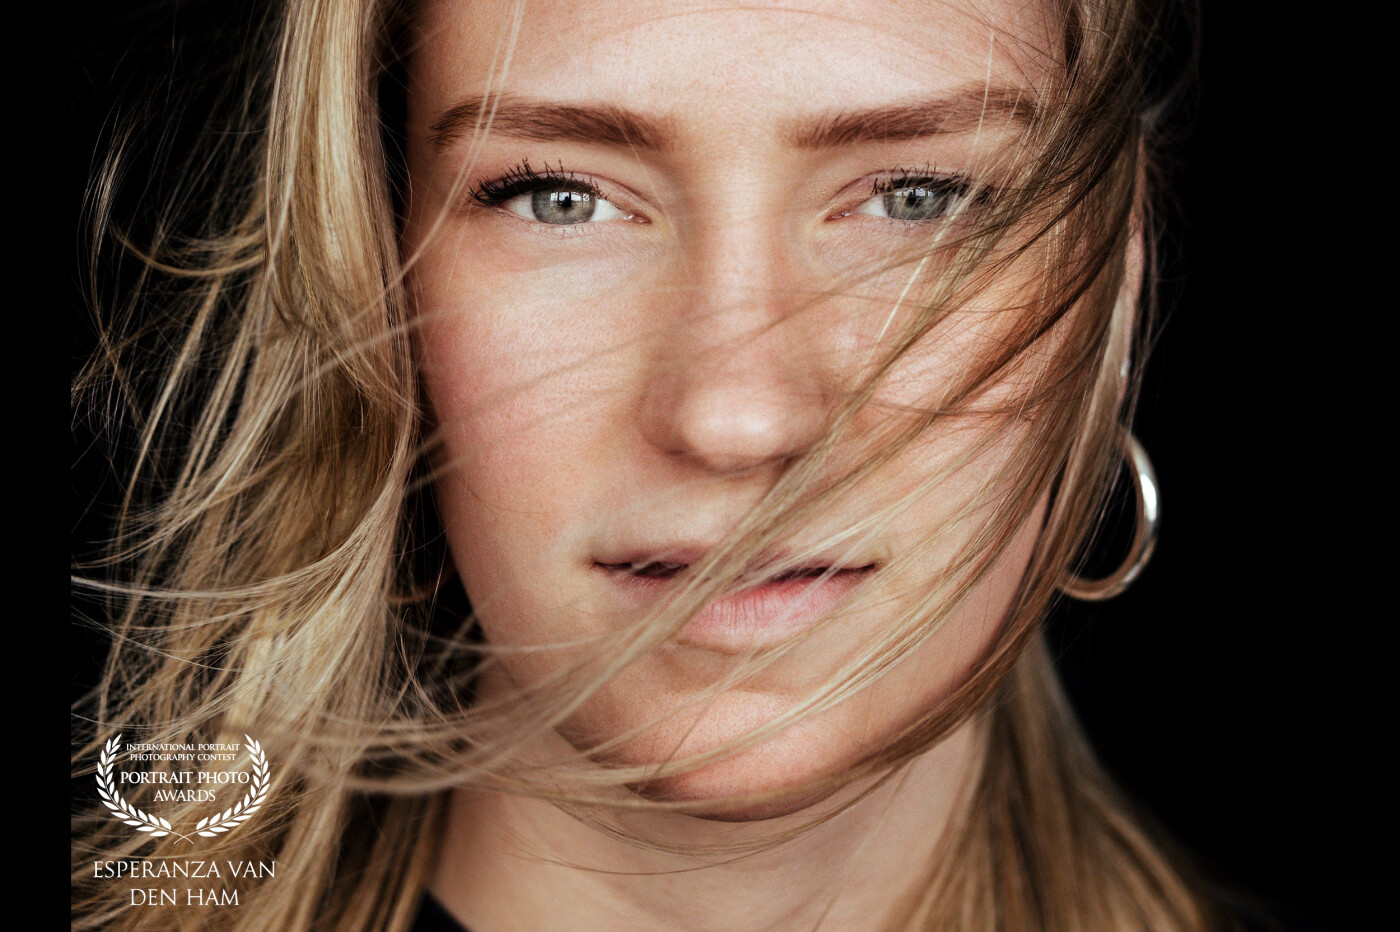 Model: Erin<br />
Created by: @iamshootingportraits<br />
www.iamshootingportraits.nl